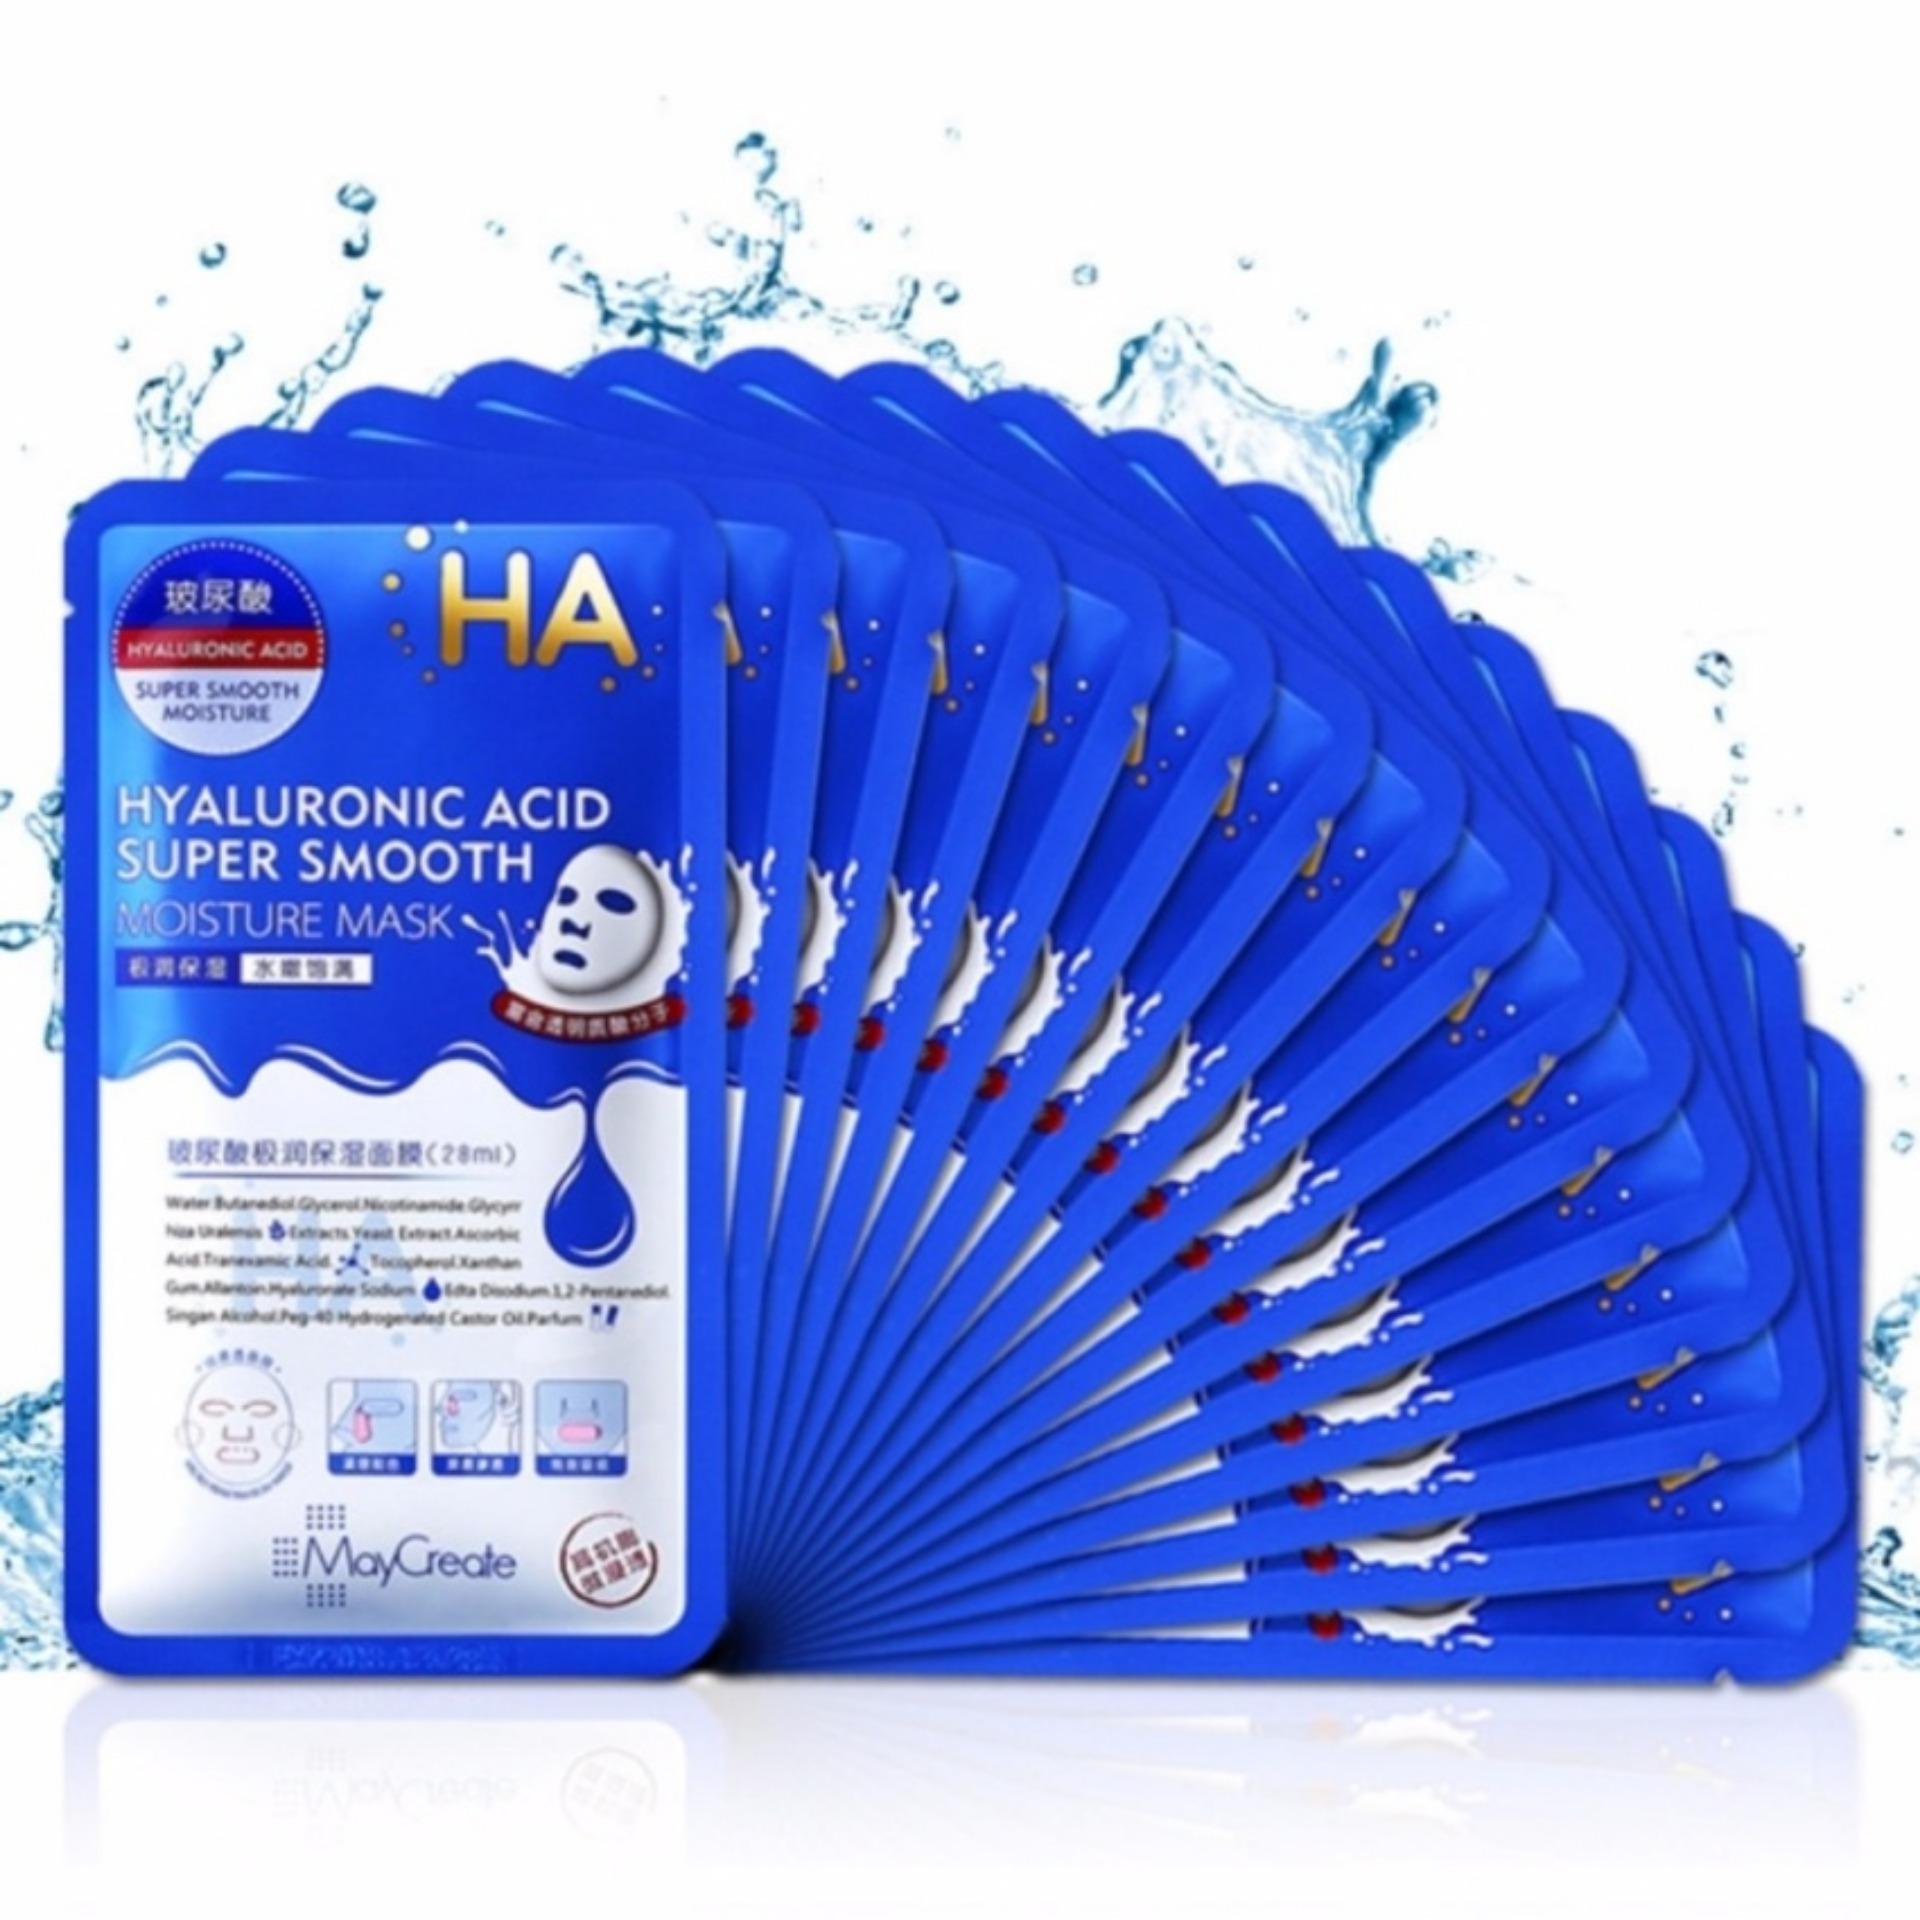 Bộ 20 Mặt nạ dưỡng da HA MayCreate - Hyaluronic Acid Super Smooth Mask (xanh)